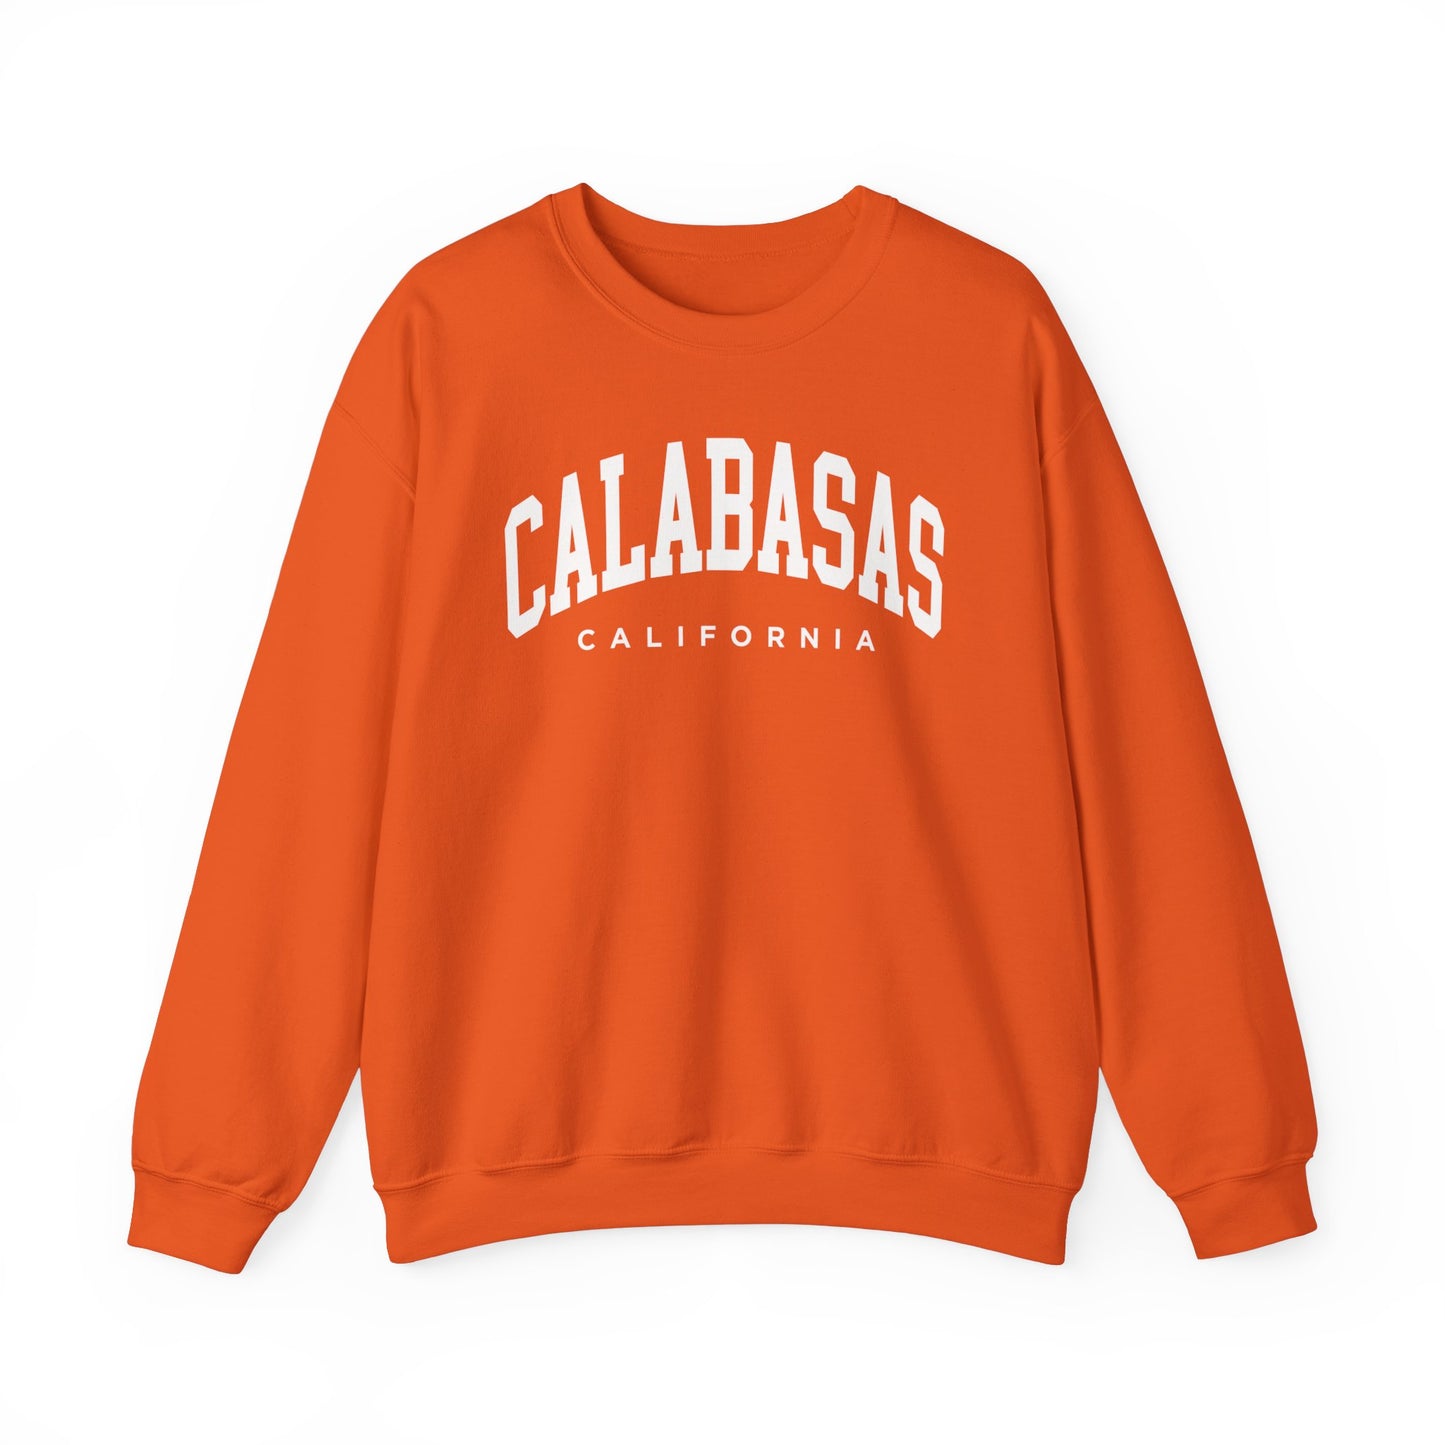 Calabasas California Sweatshirt